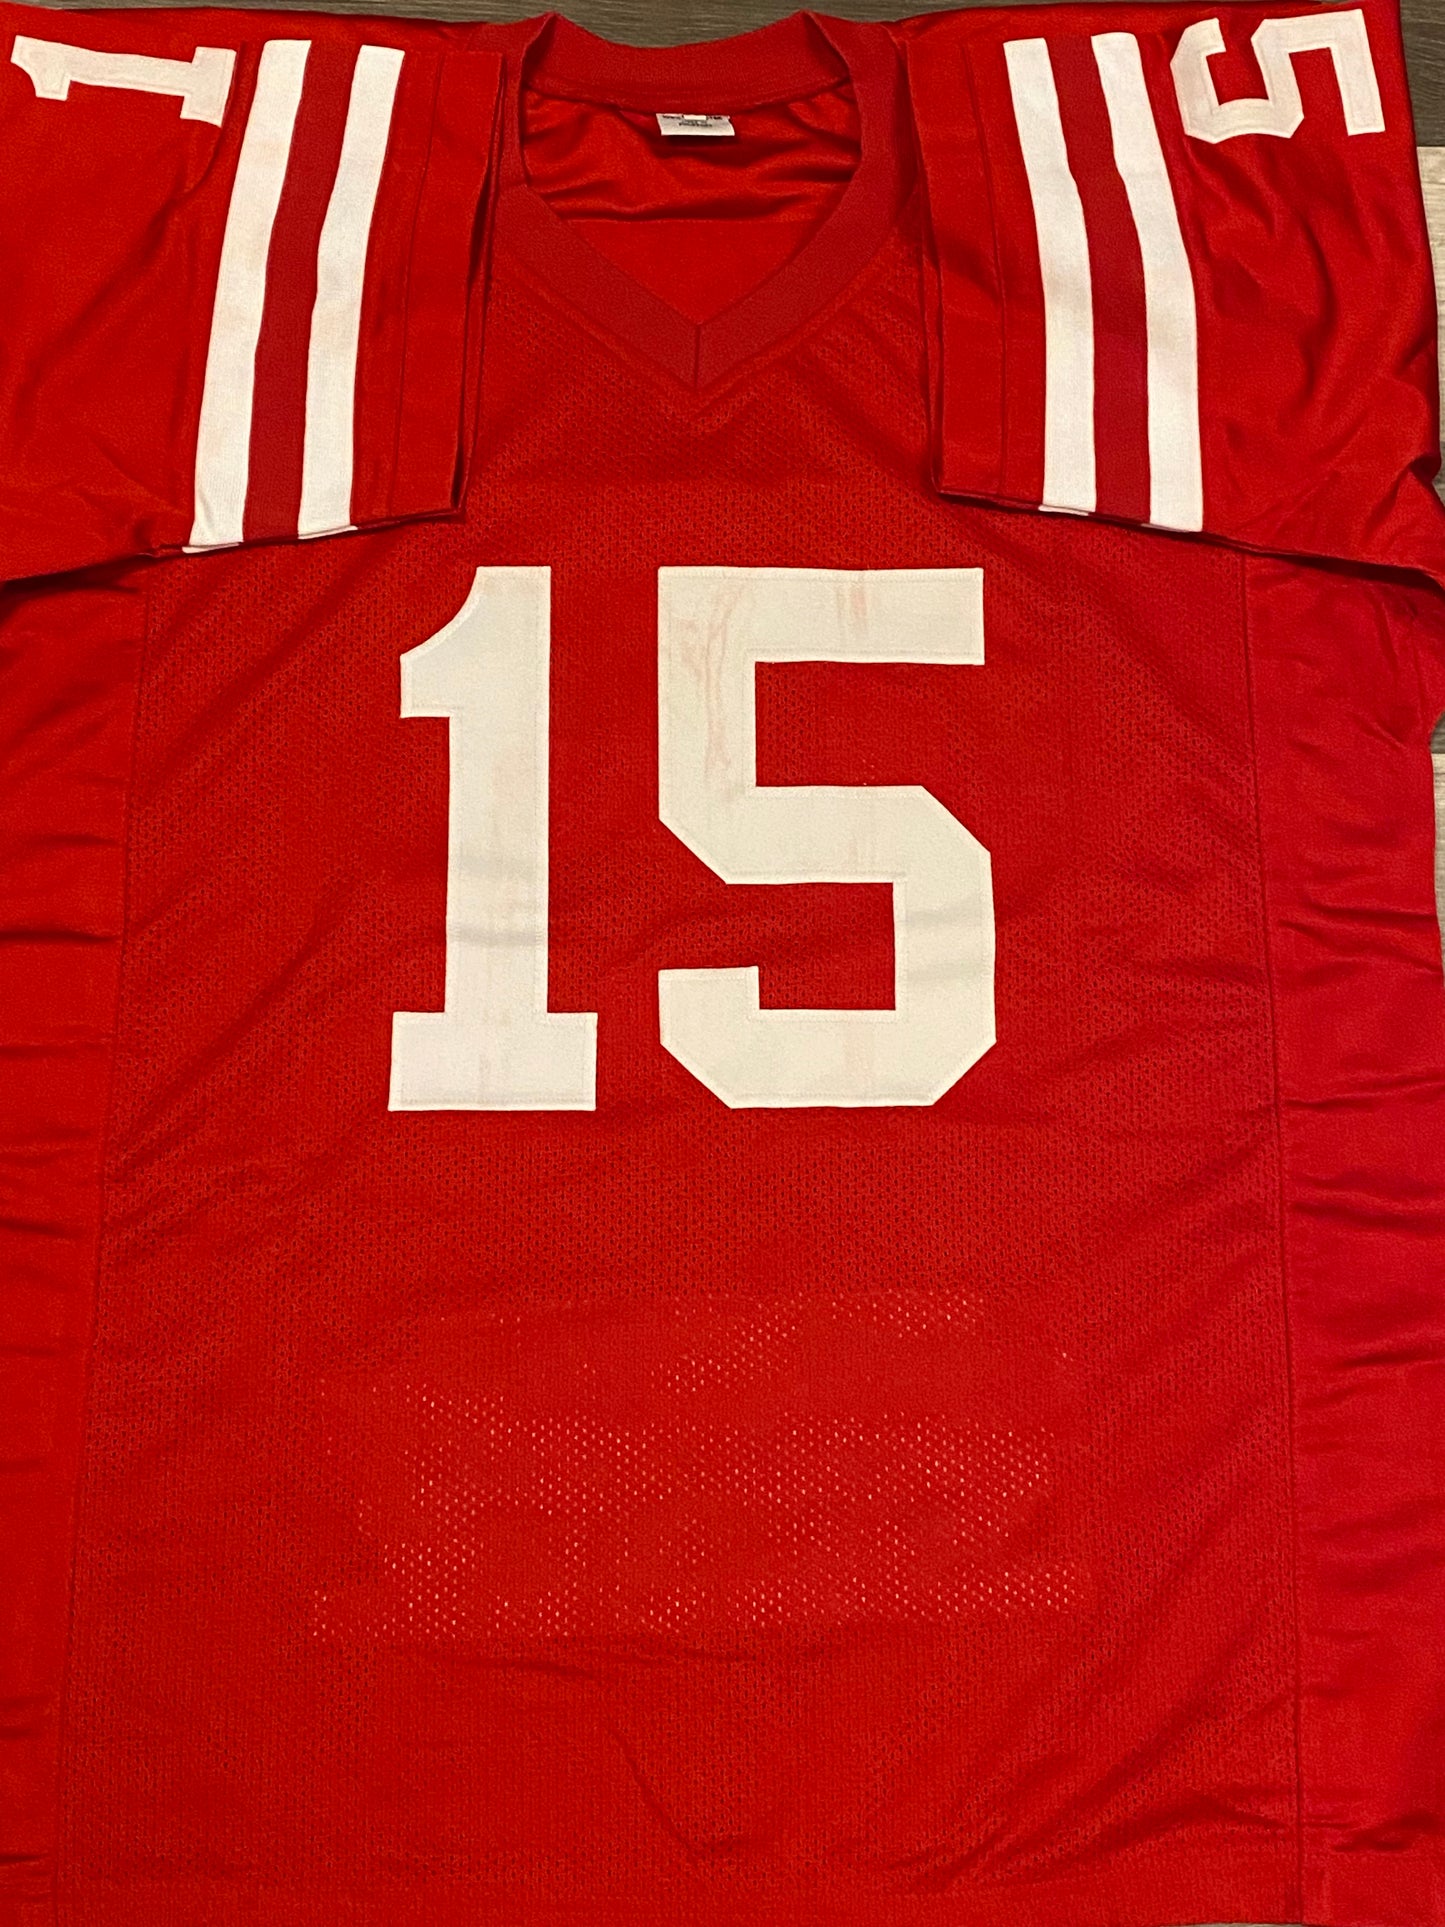 Tommie Frazier signed custom jersey Nebraska inscribed "'94-95 Nat. Champs" (GT Sports Marketing COA)